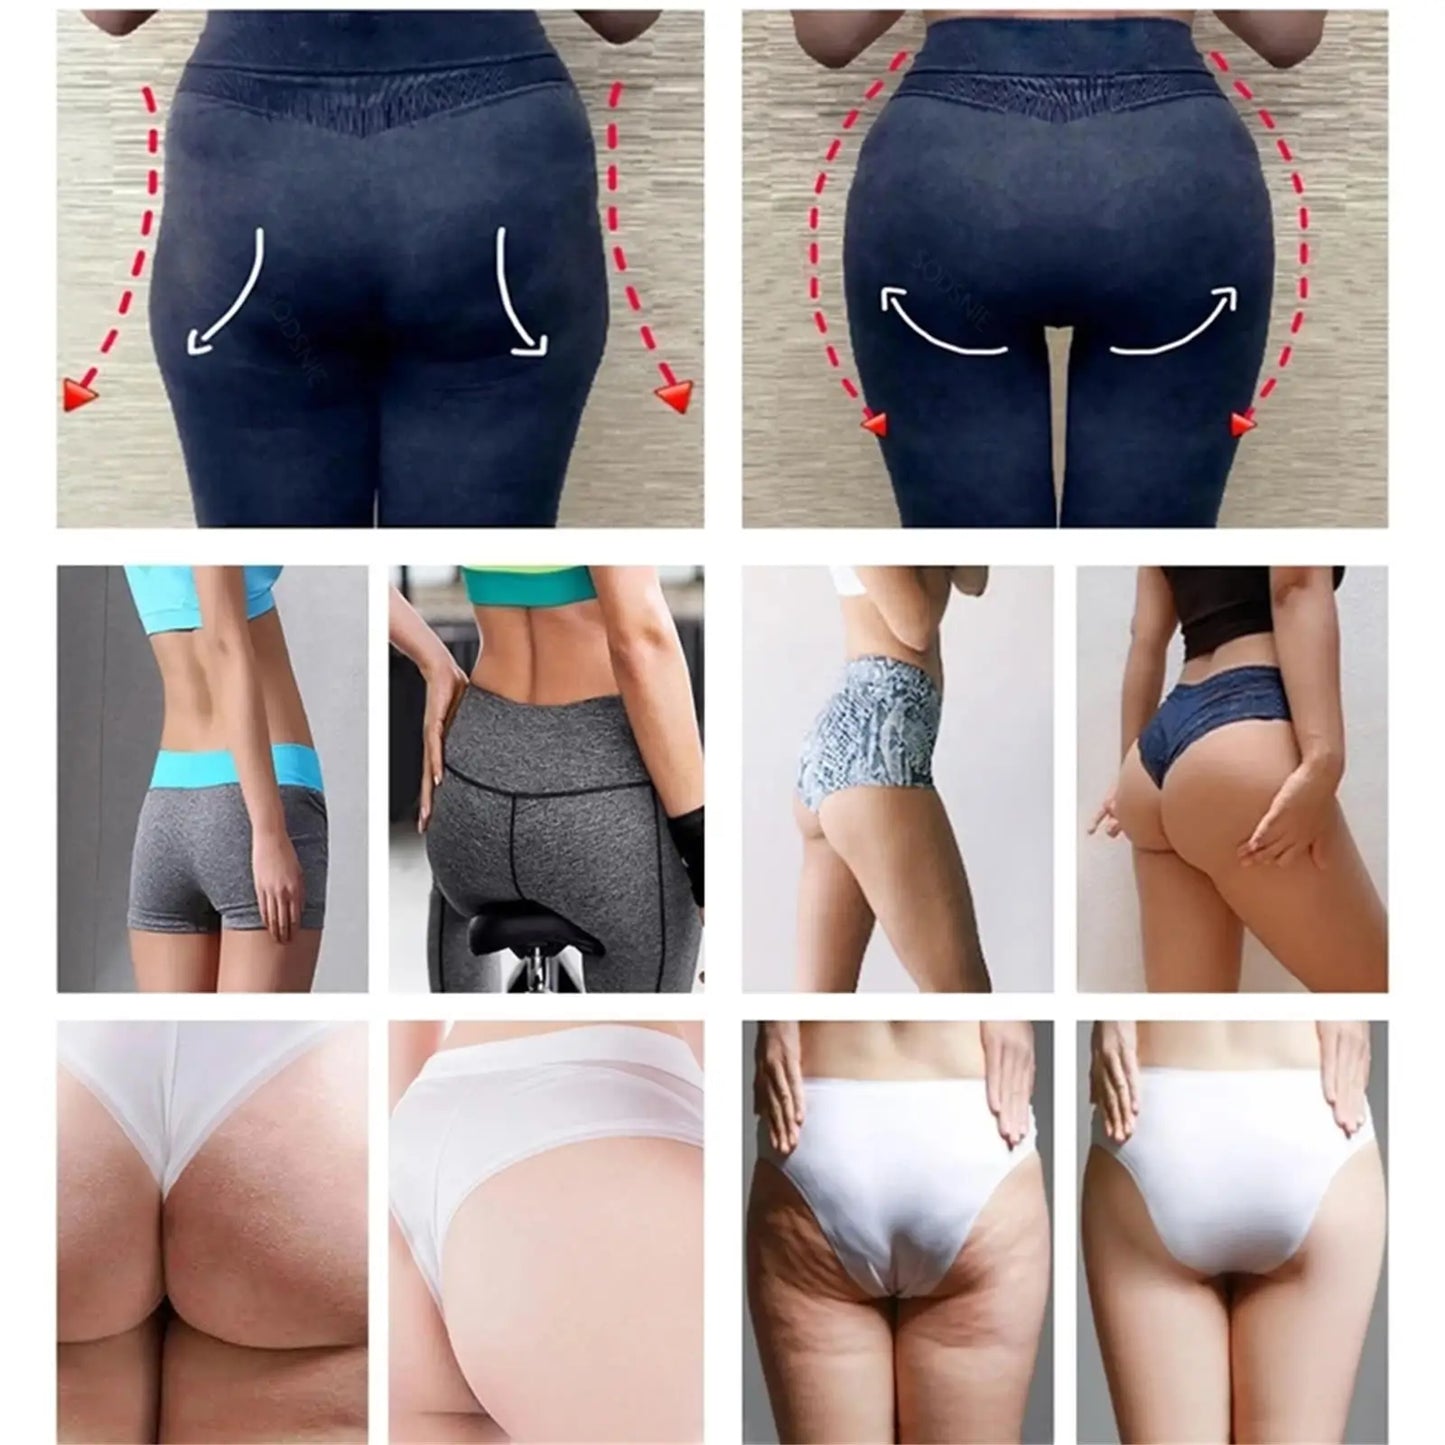 Buttock Enlargement Cream Butt Lift Up Firming Essential Oil Big Ass Enhance Hip Growth Tighten Shaping Sexy Body Care For Women